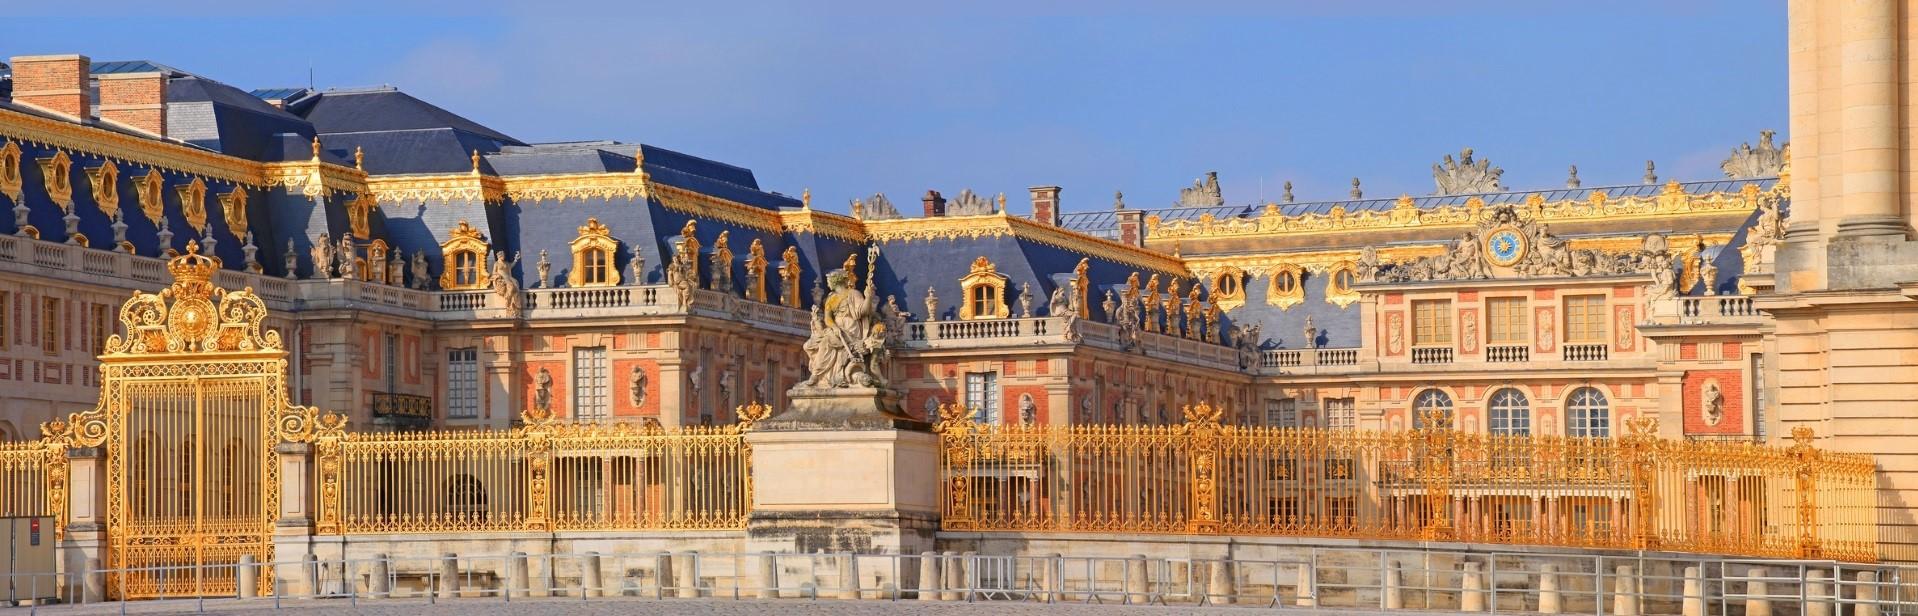 کاخ ورسای-chateau de versailles